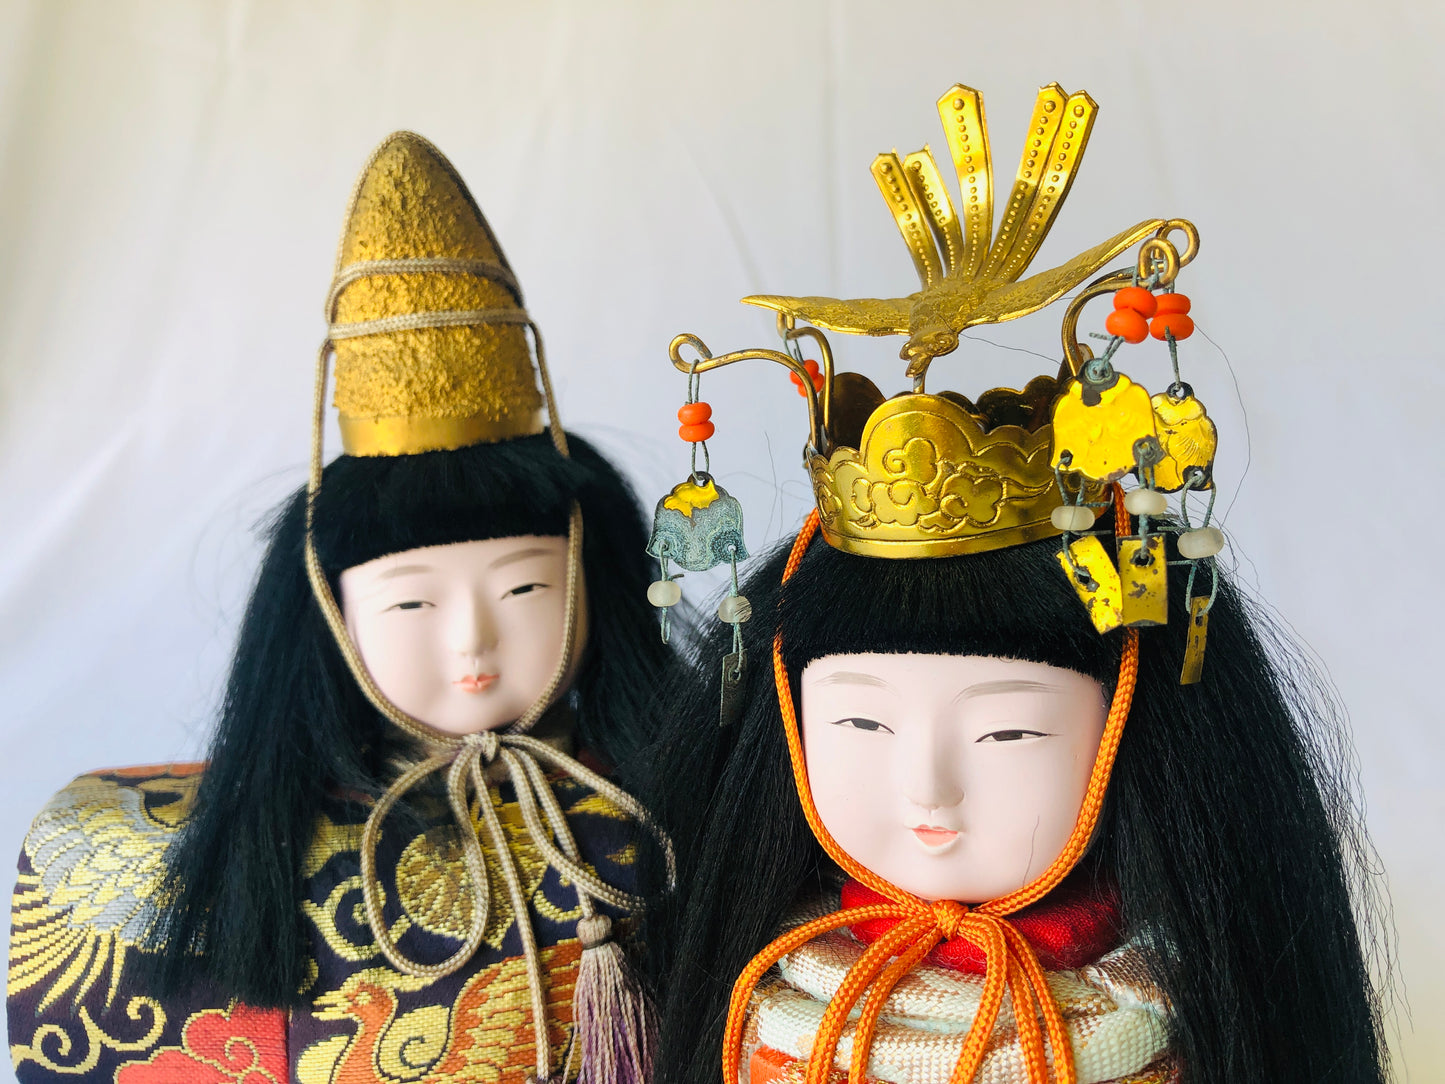 Y4556 NINGYO Kimekomi standing Hina dolls Japan antique statue figure figurine